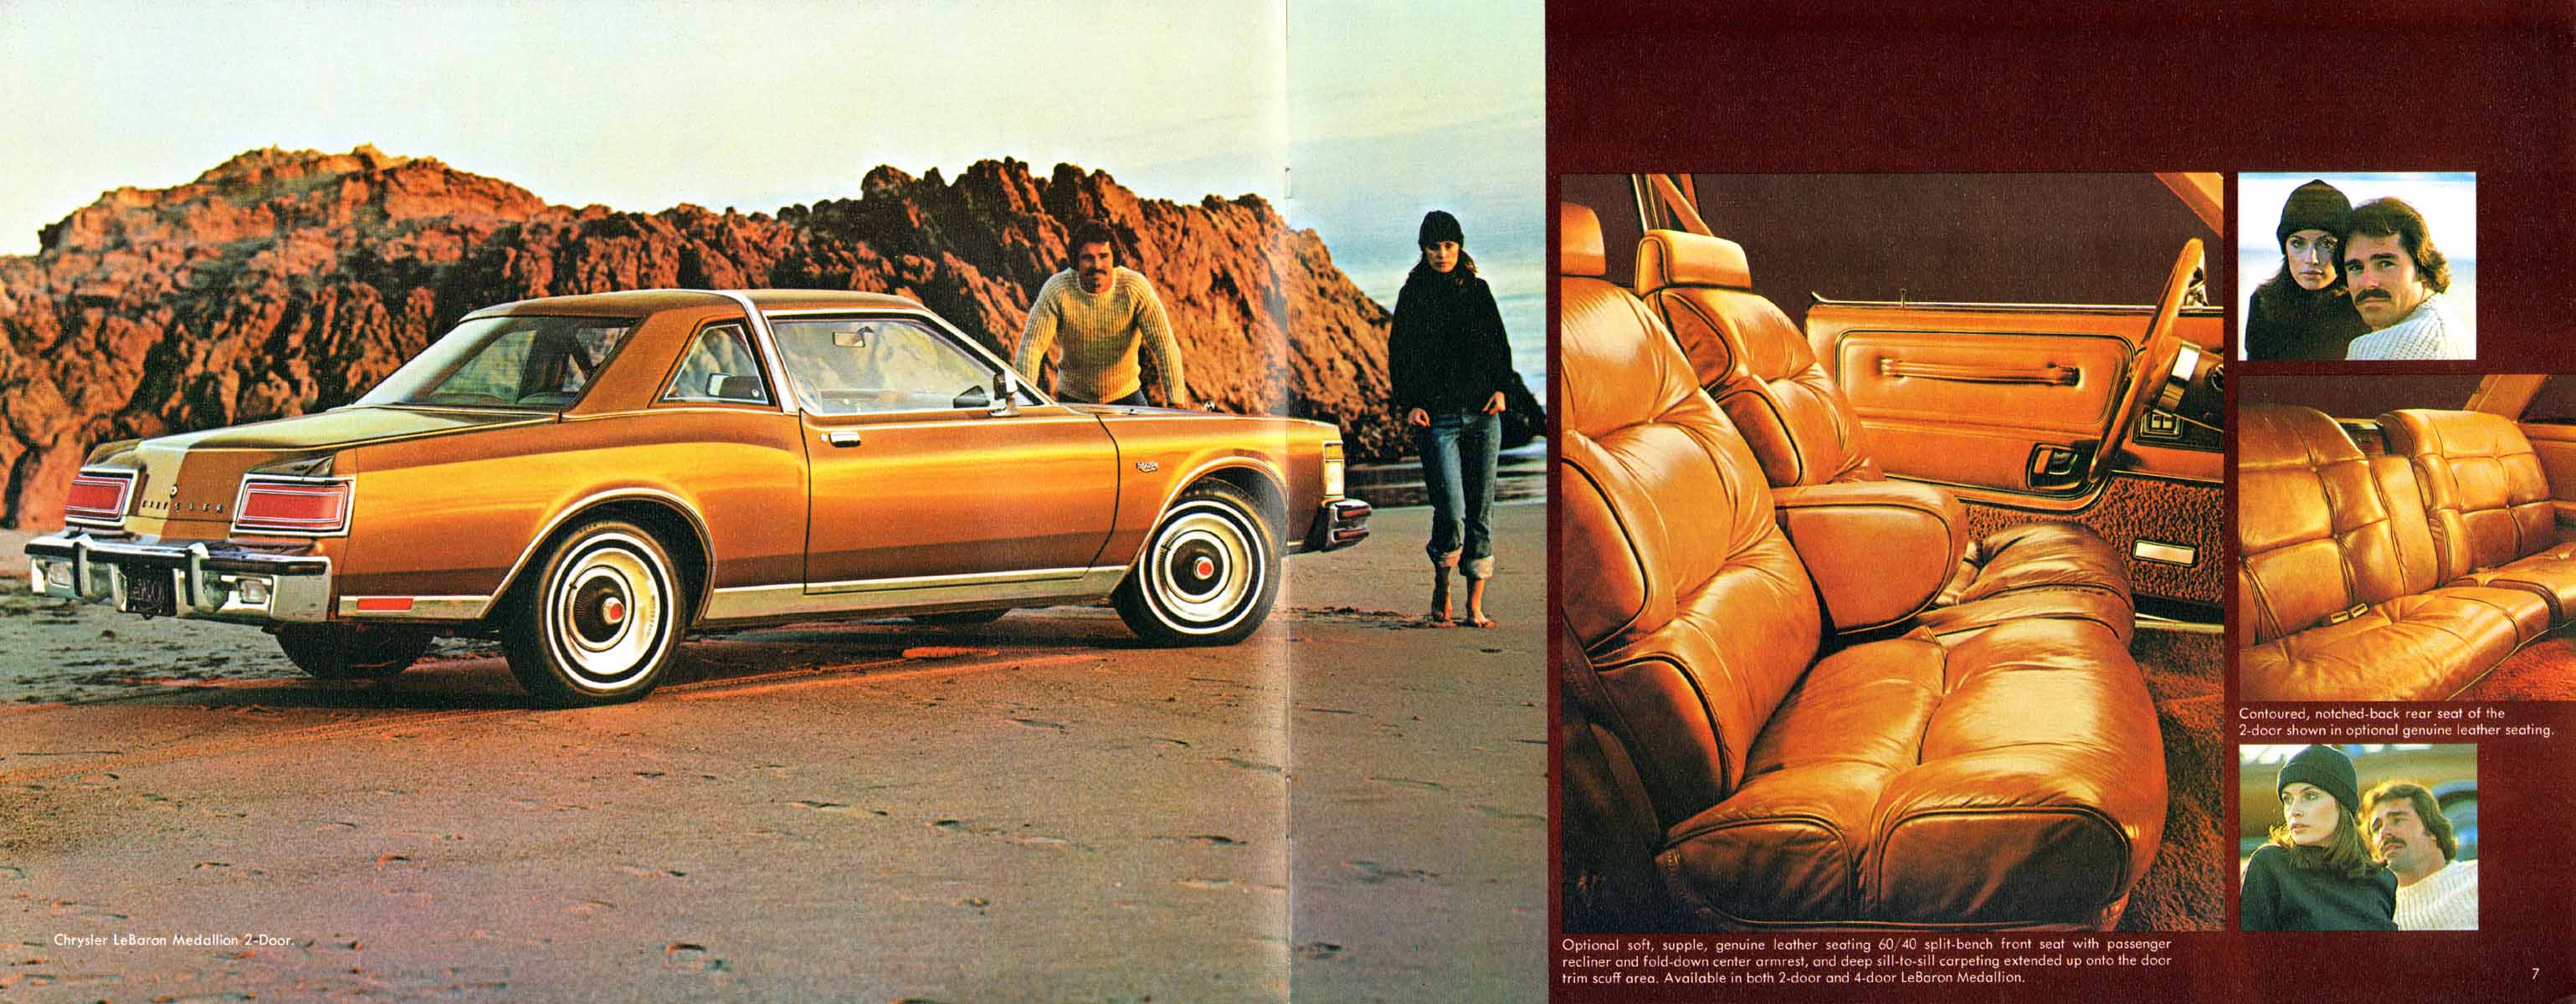 1978 Chrysler LeBaron-06-07